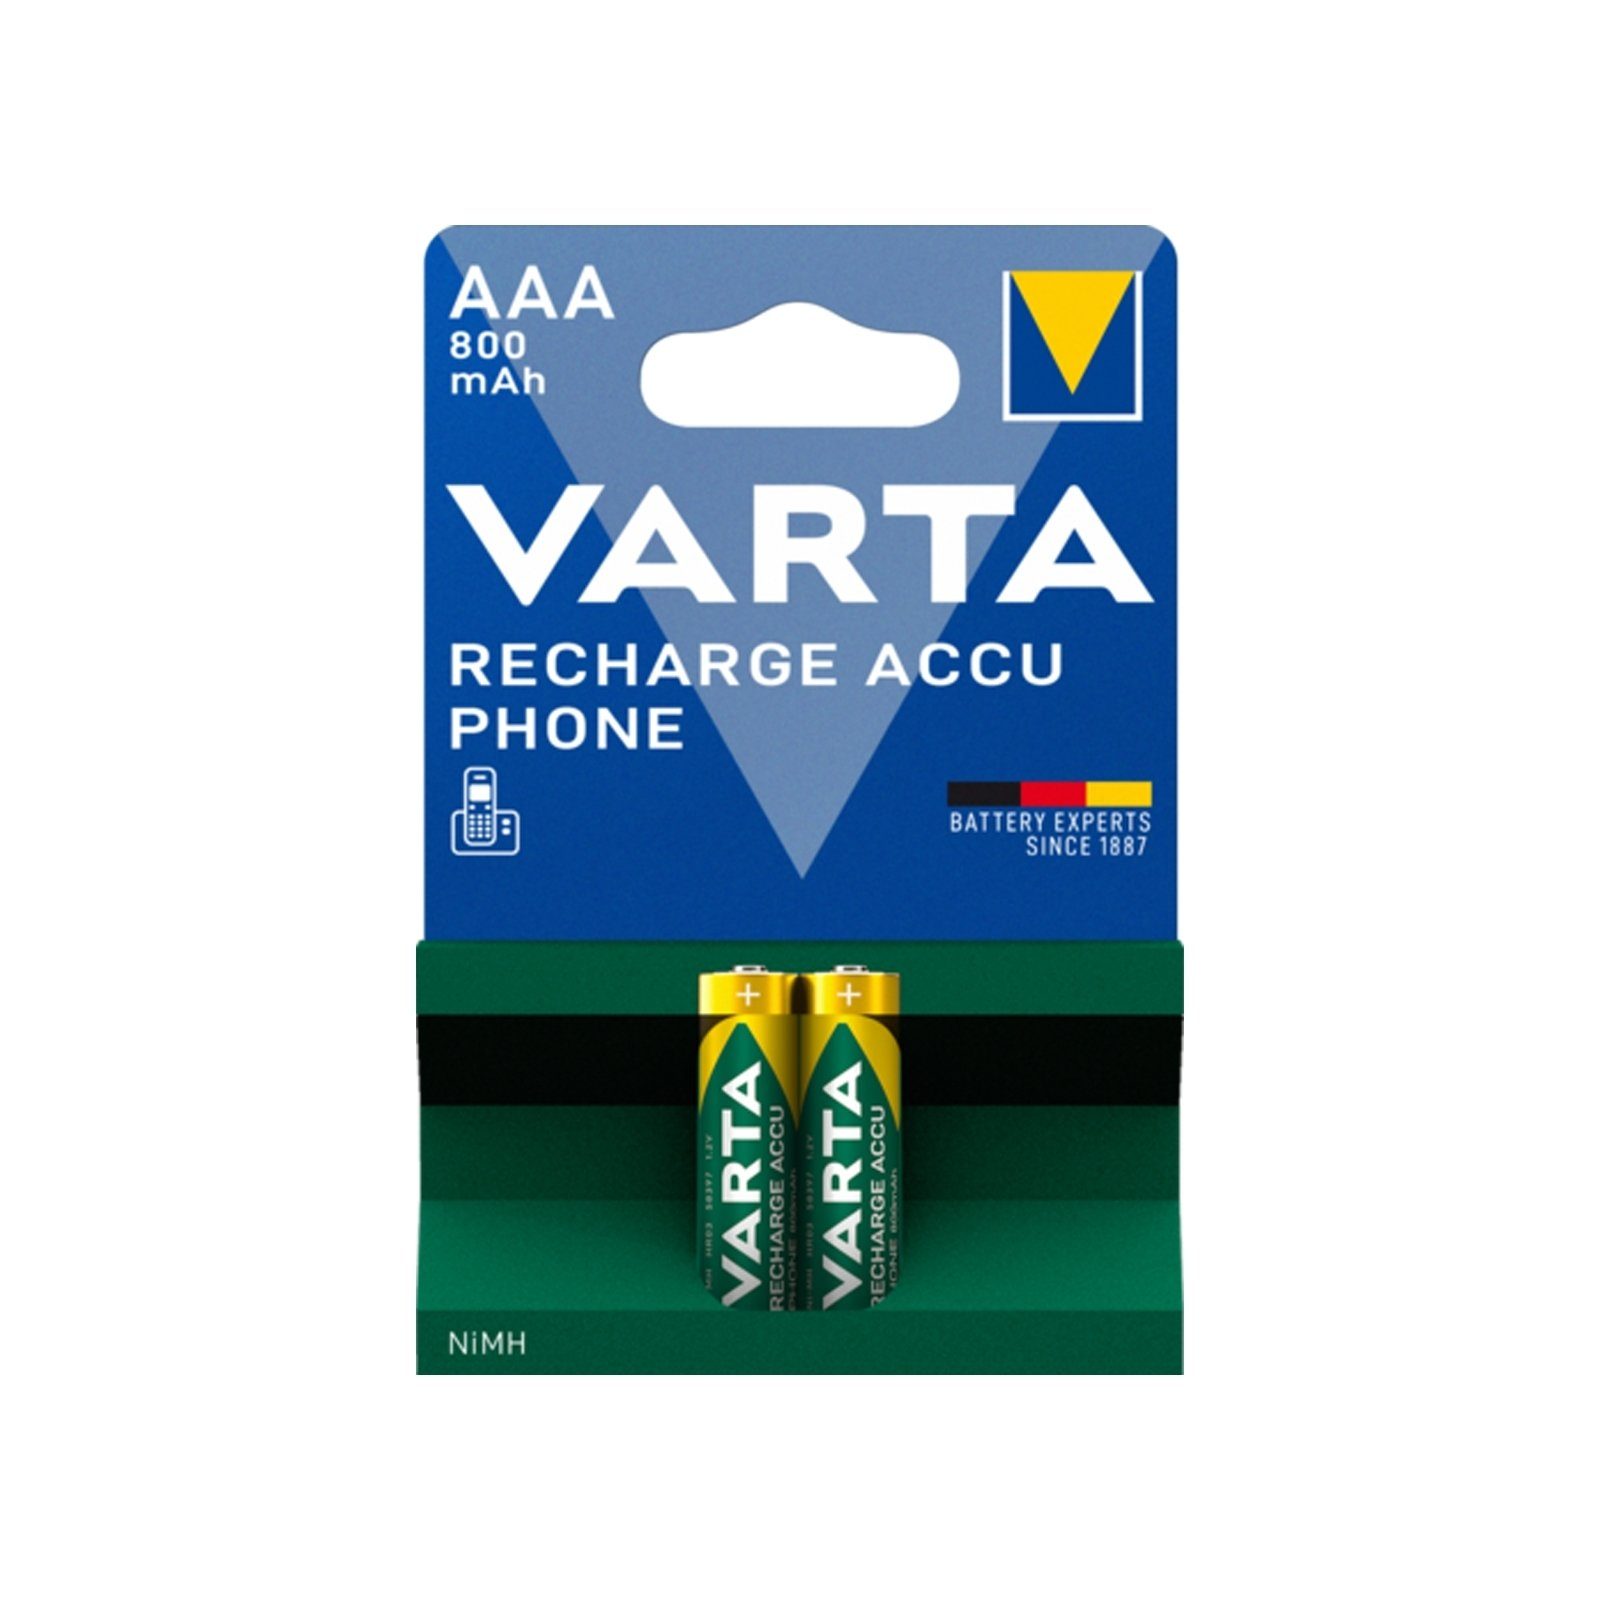 800 Recharge VARTA Batterie 2xAAA mAh Phone Accu